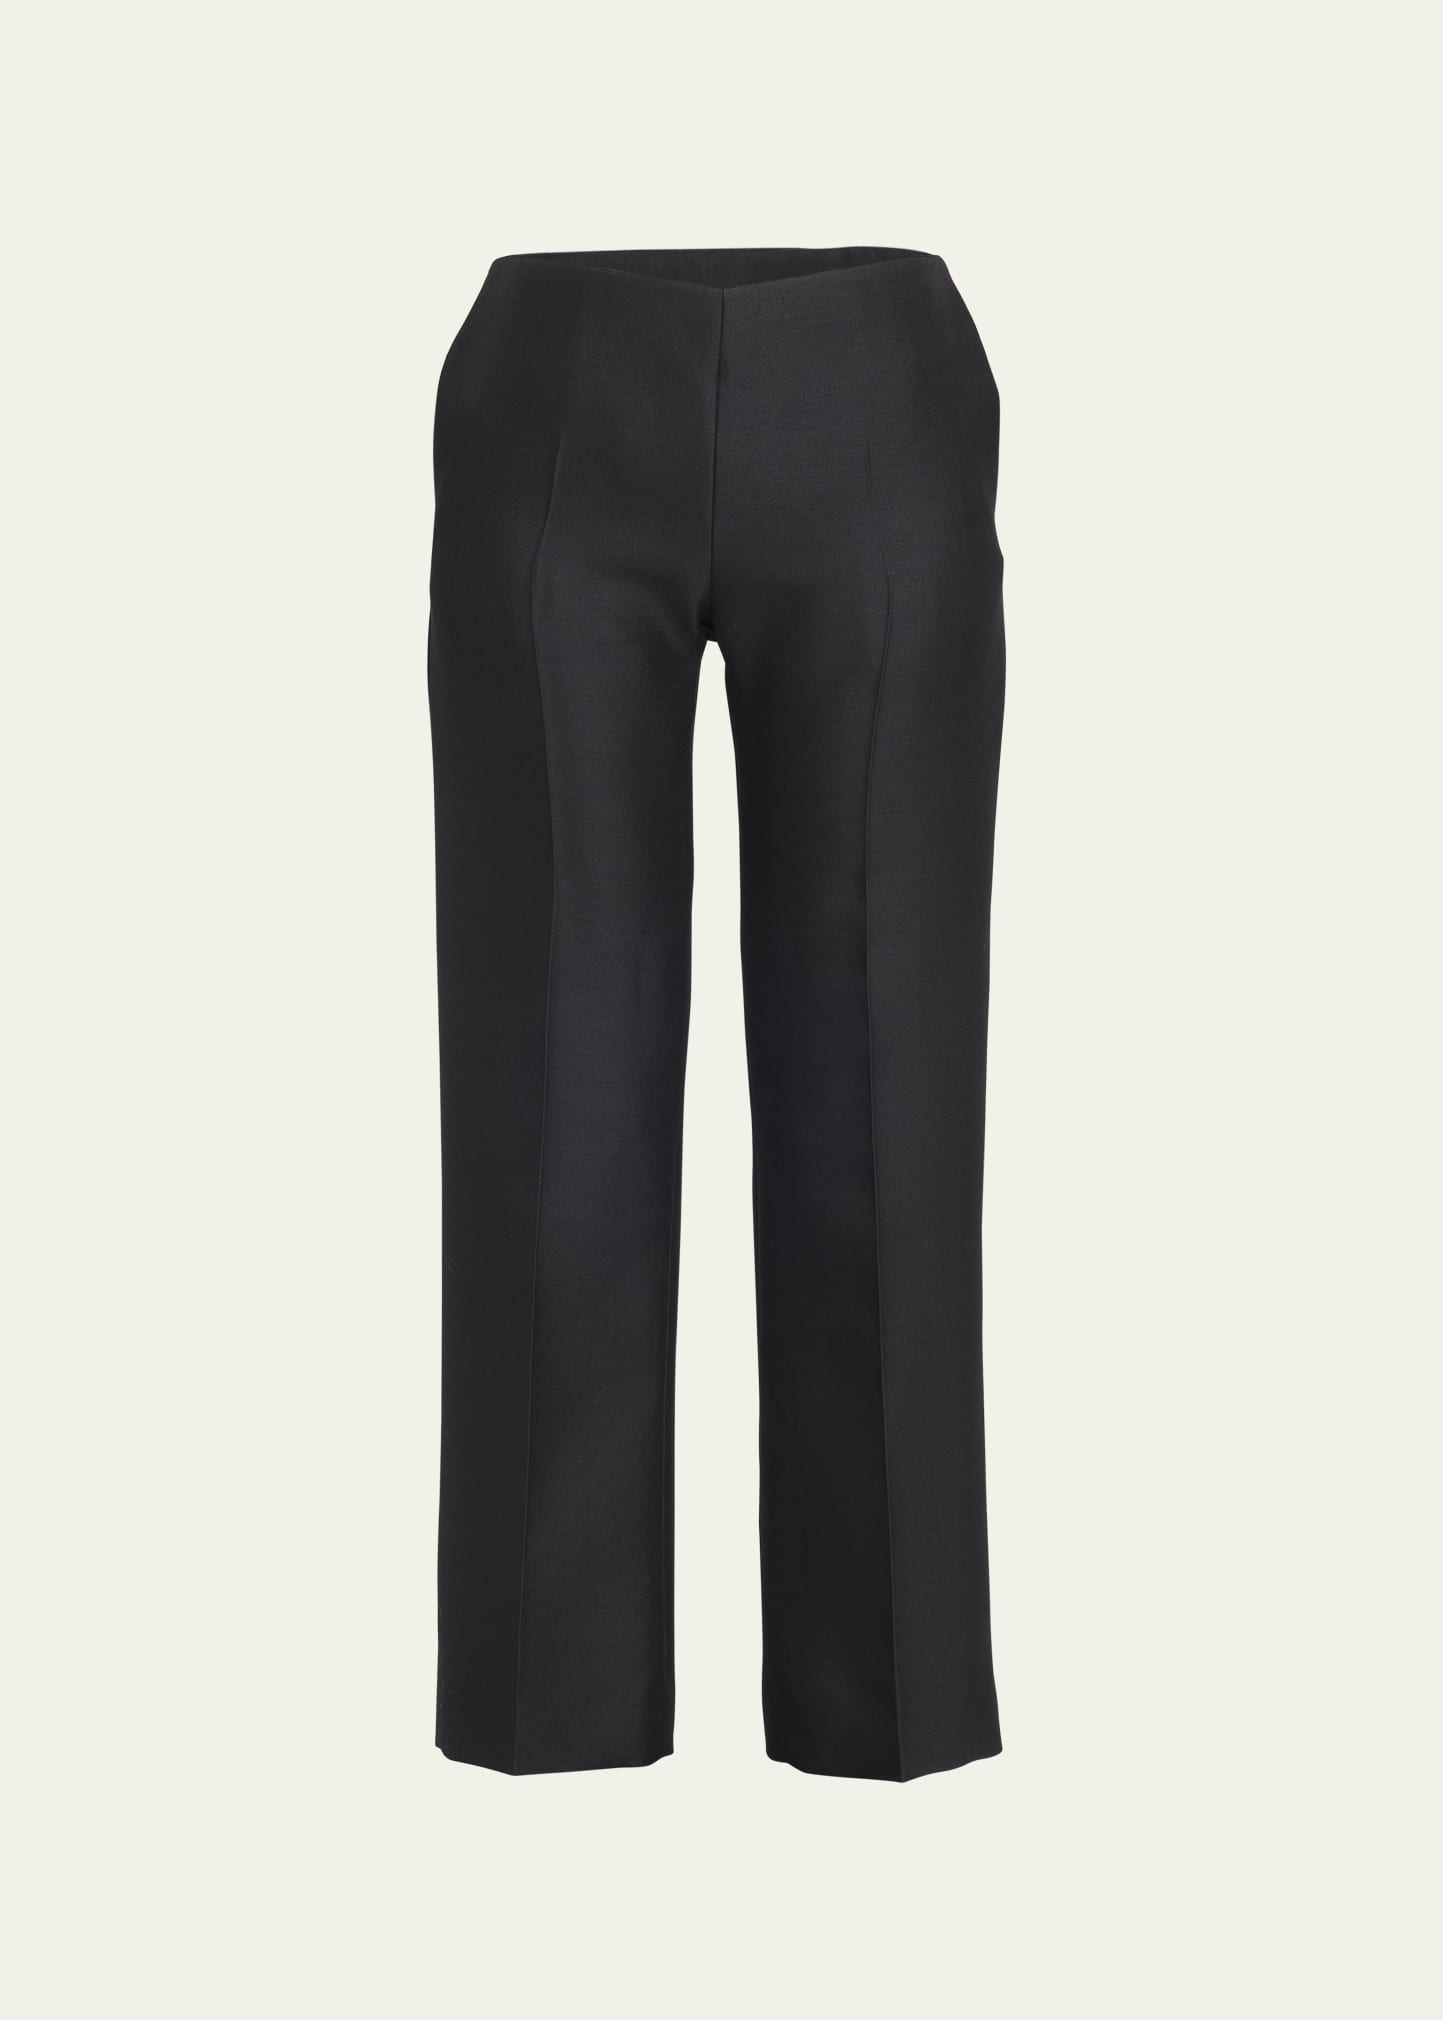 Akris punto Francoise Slim-Straight Pants, Black - Bergdorf Goodman